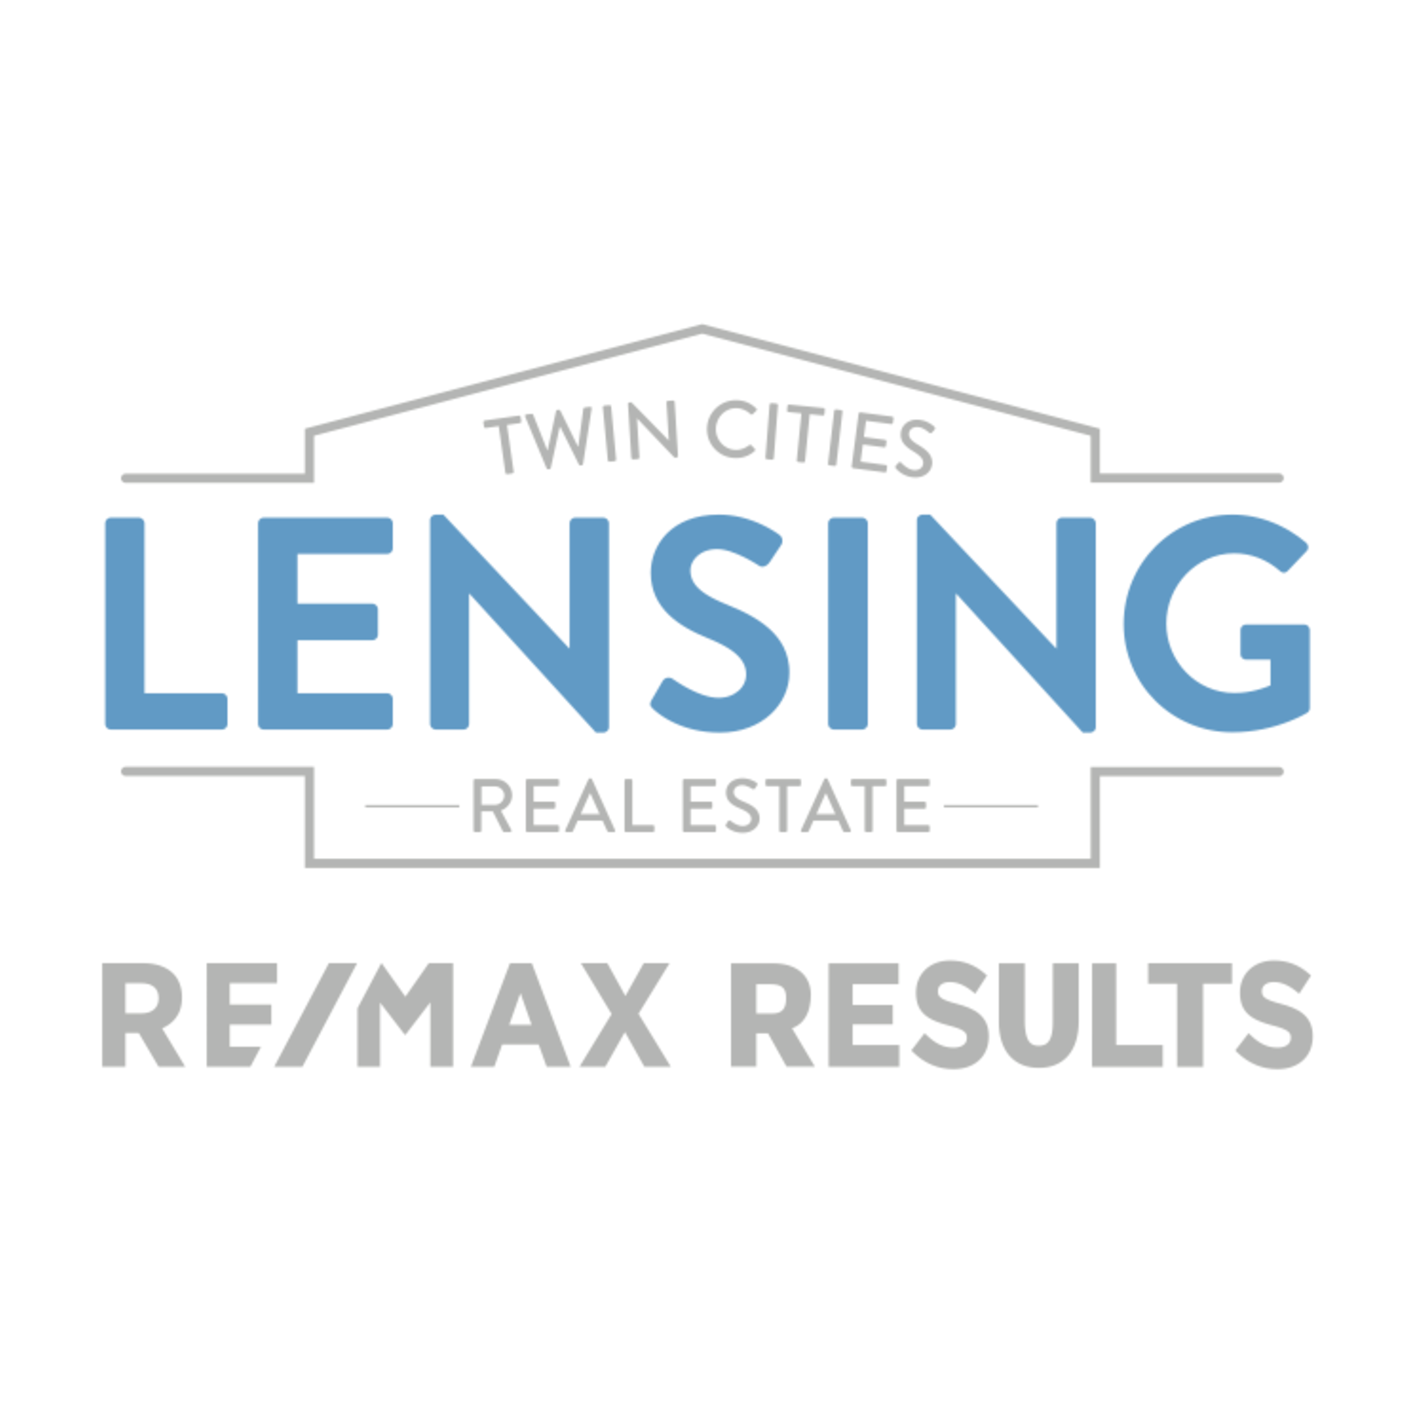 Clark Lensing | RE/MAX Results Minneapolis (612)408-8554